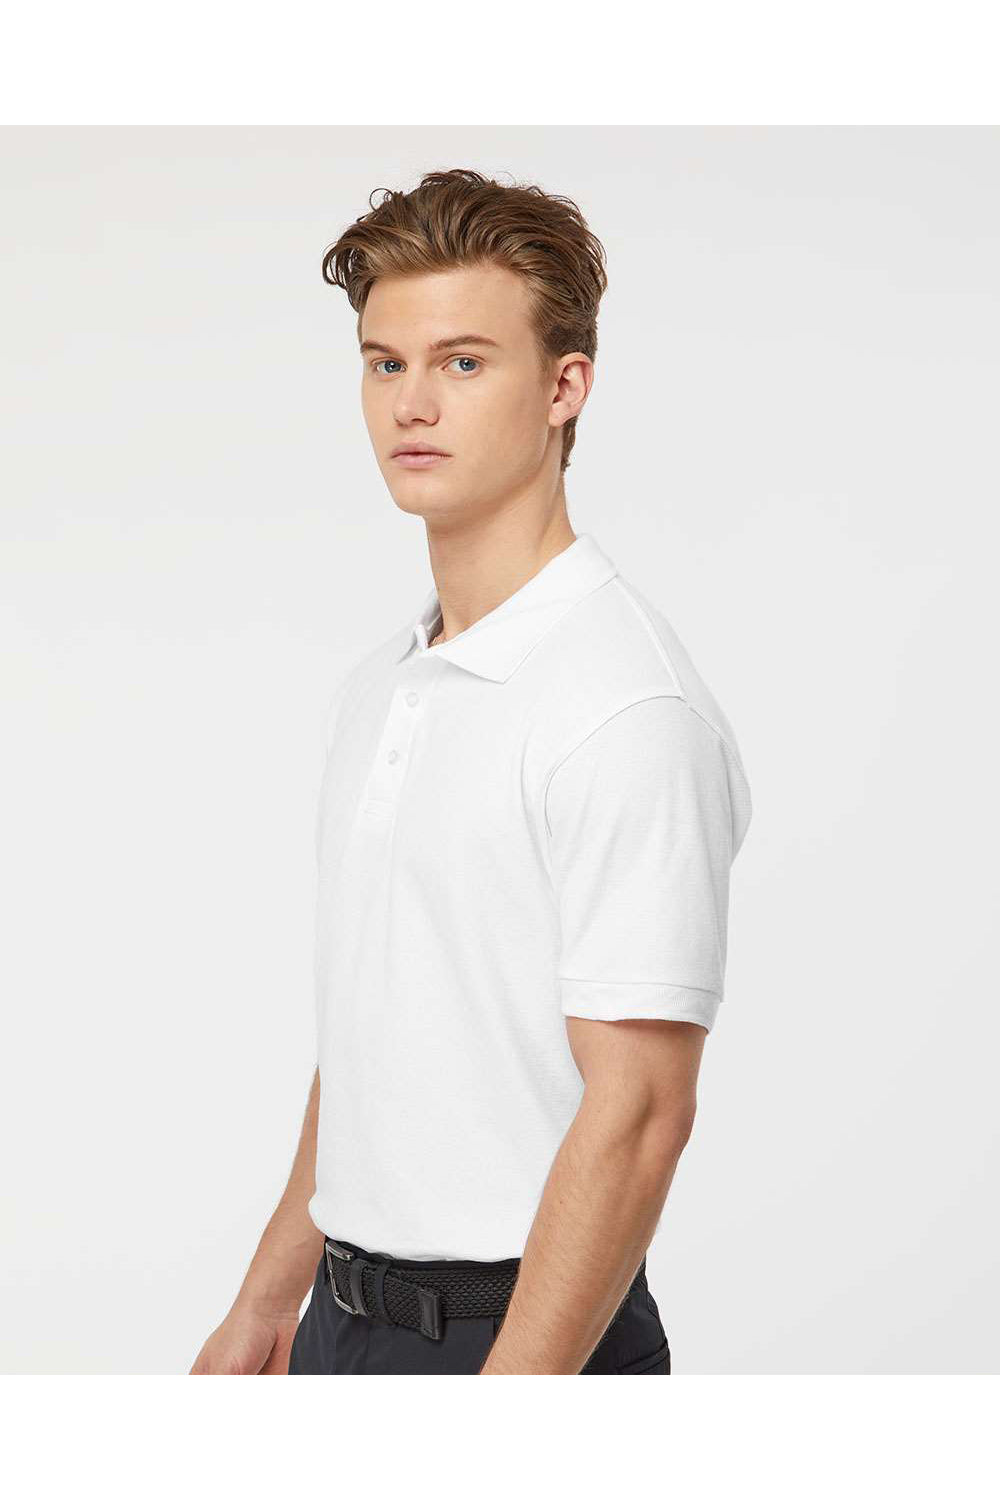 Tultex 400 Mens Sport Shirt Sleeve Polo Shirt White Model Side